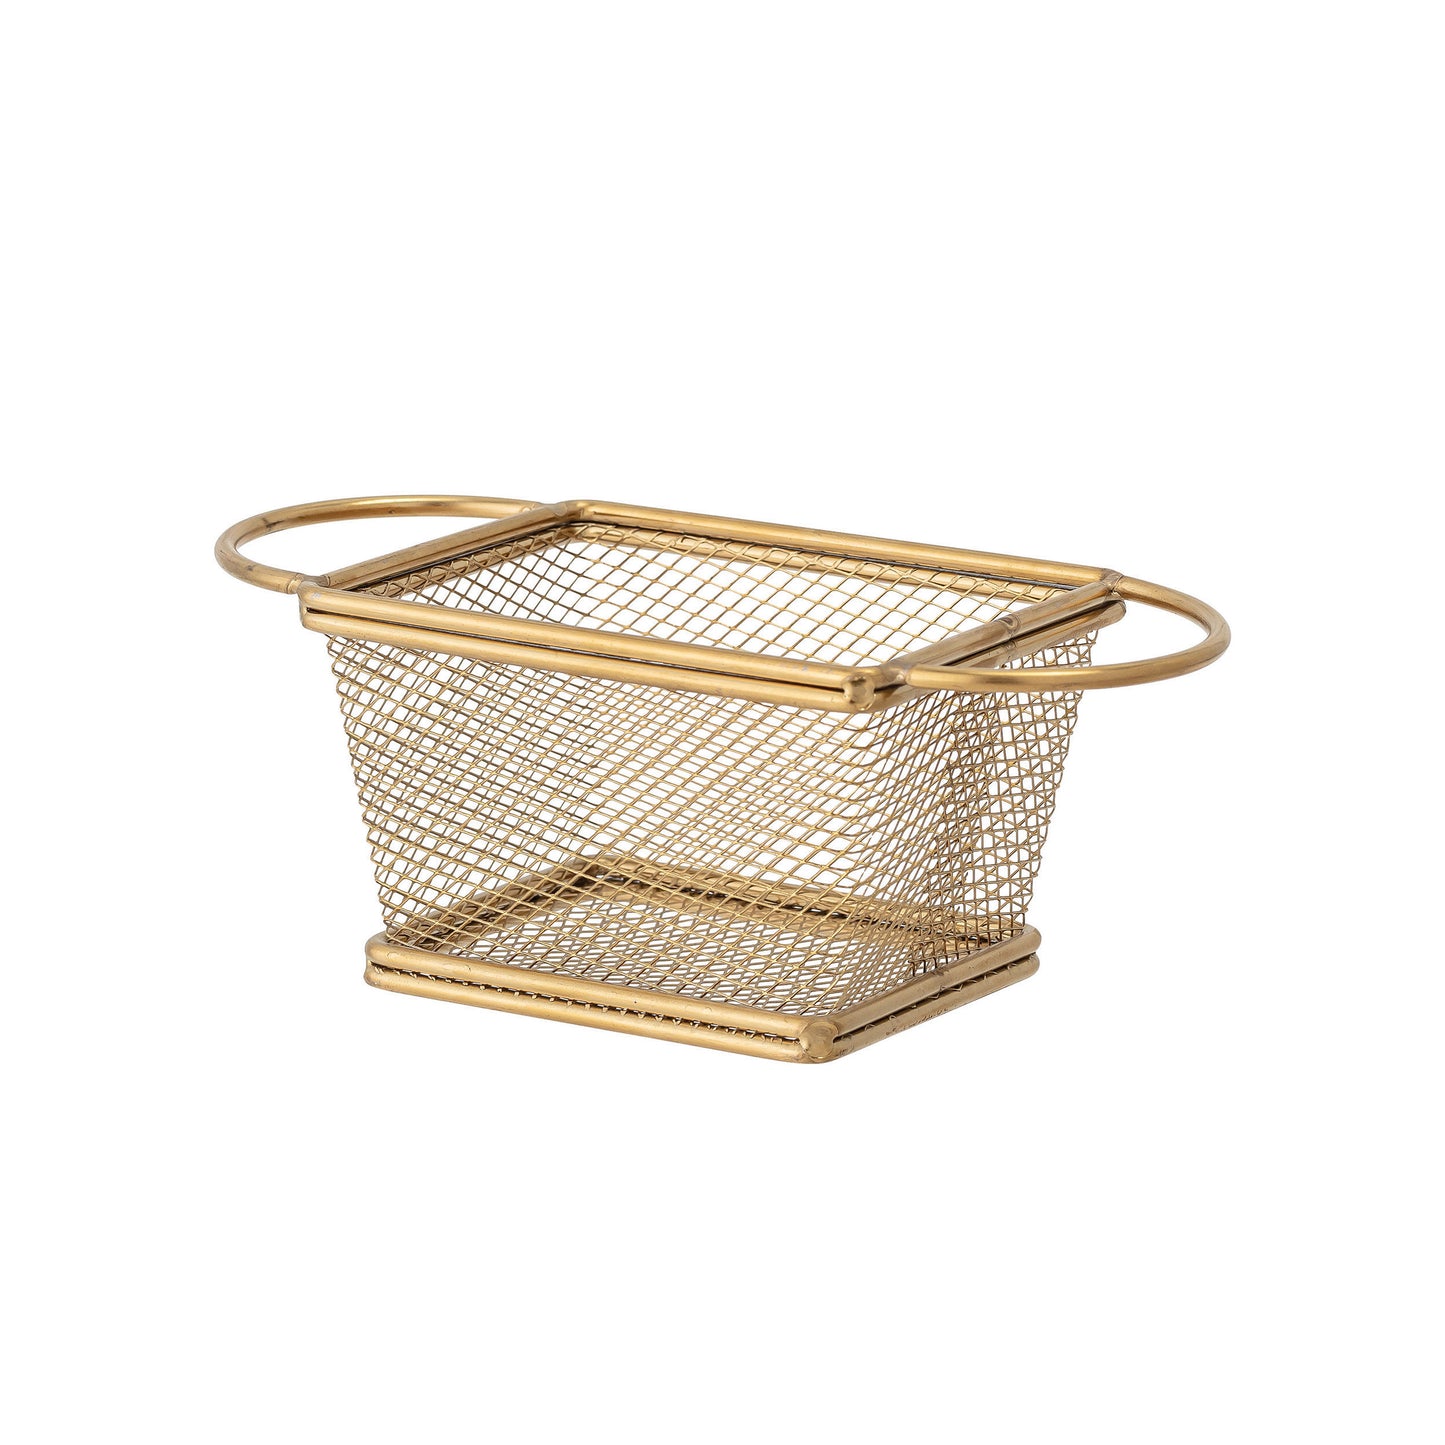 Gold Stainless Steel Mesh Basket